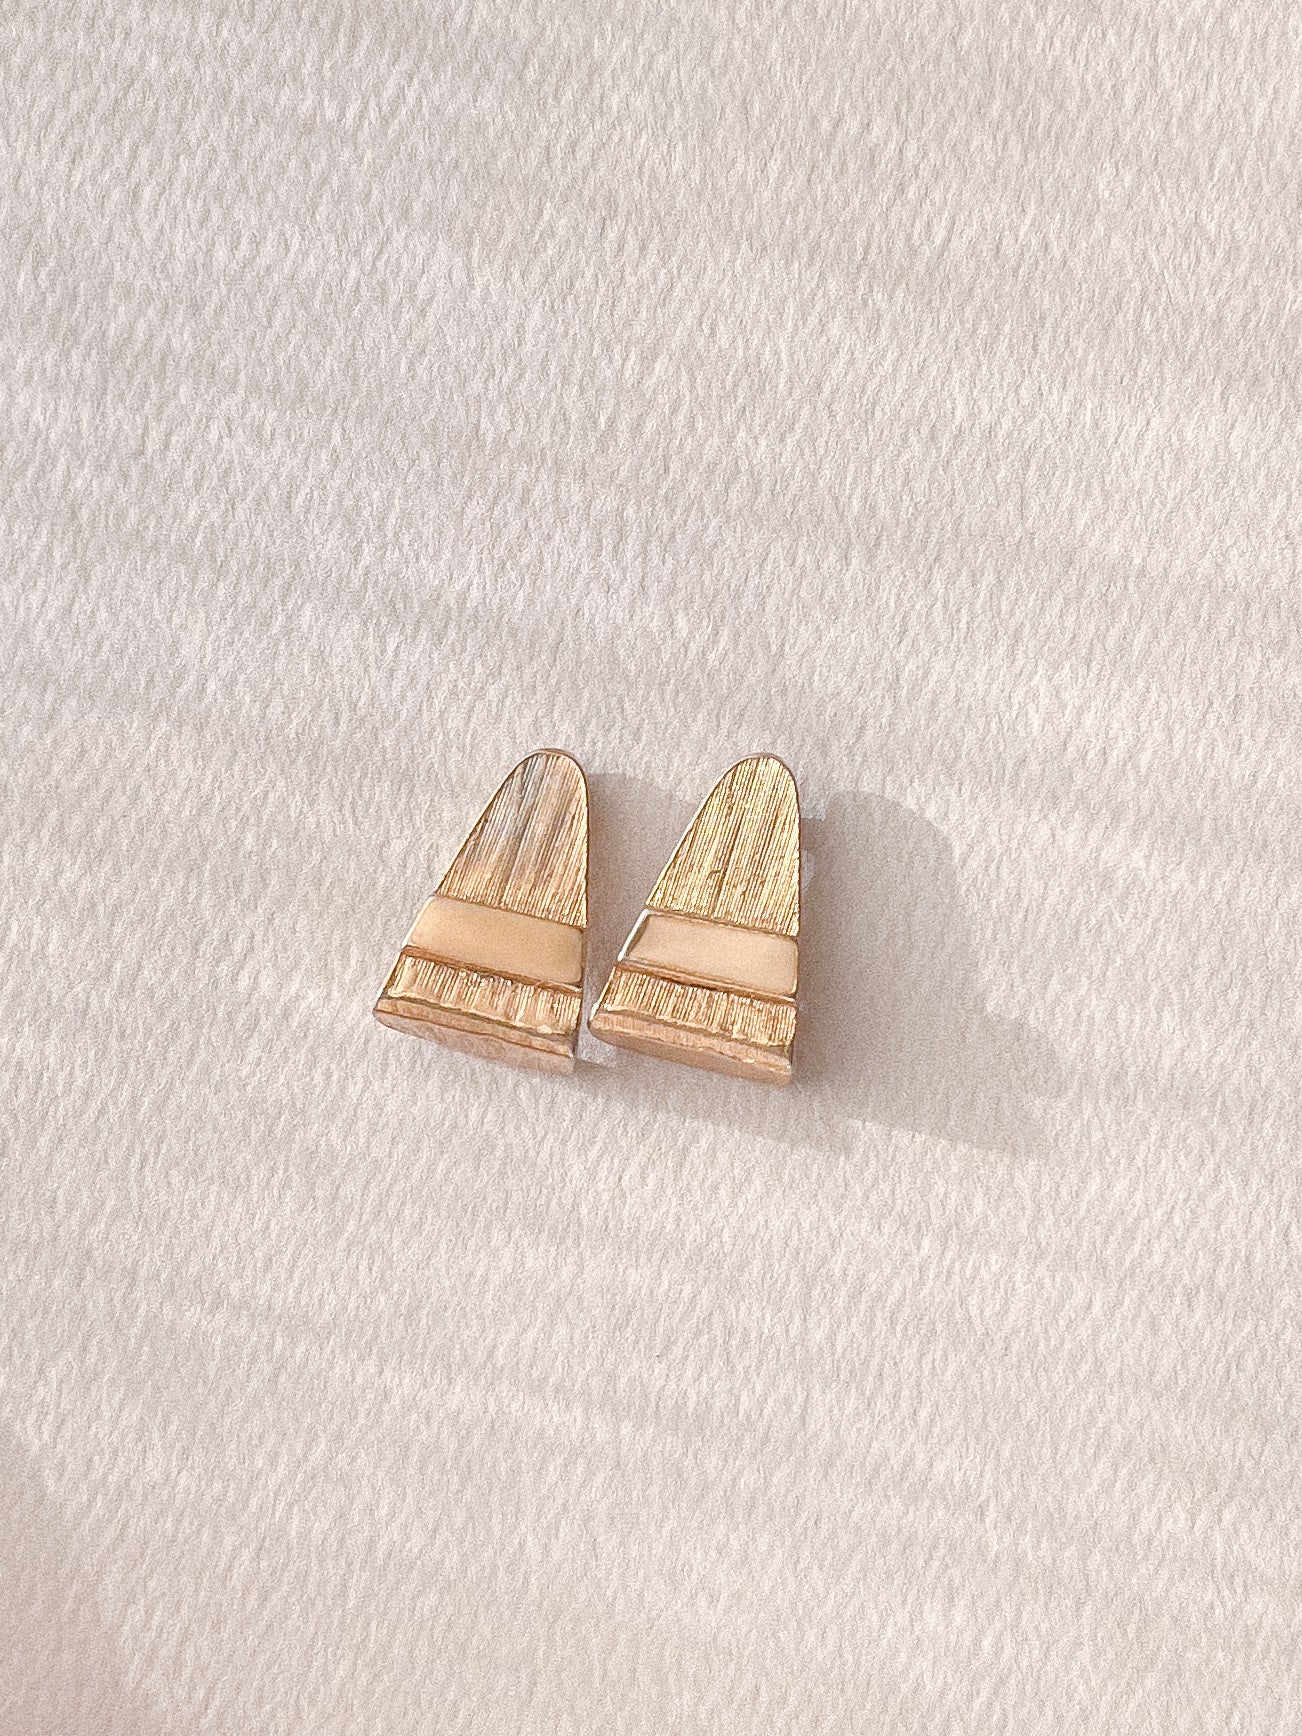 Vintage Earrings | Pyramid